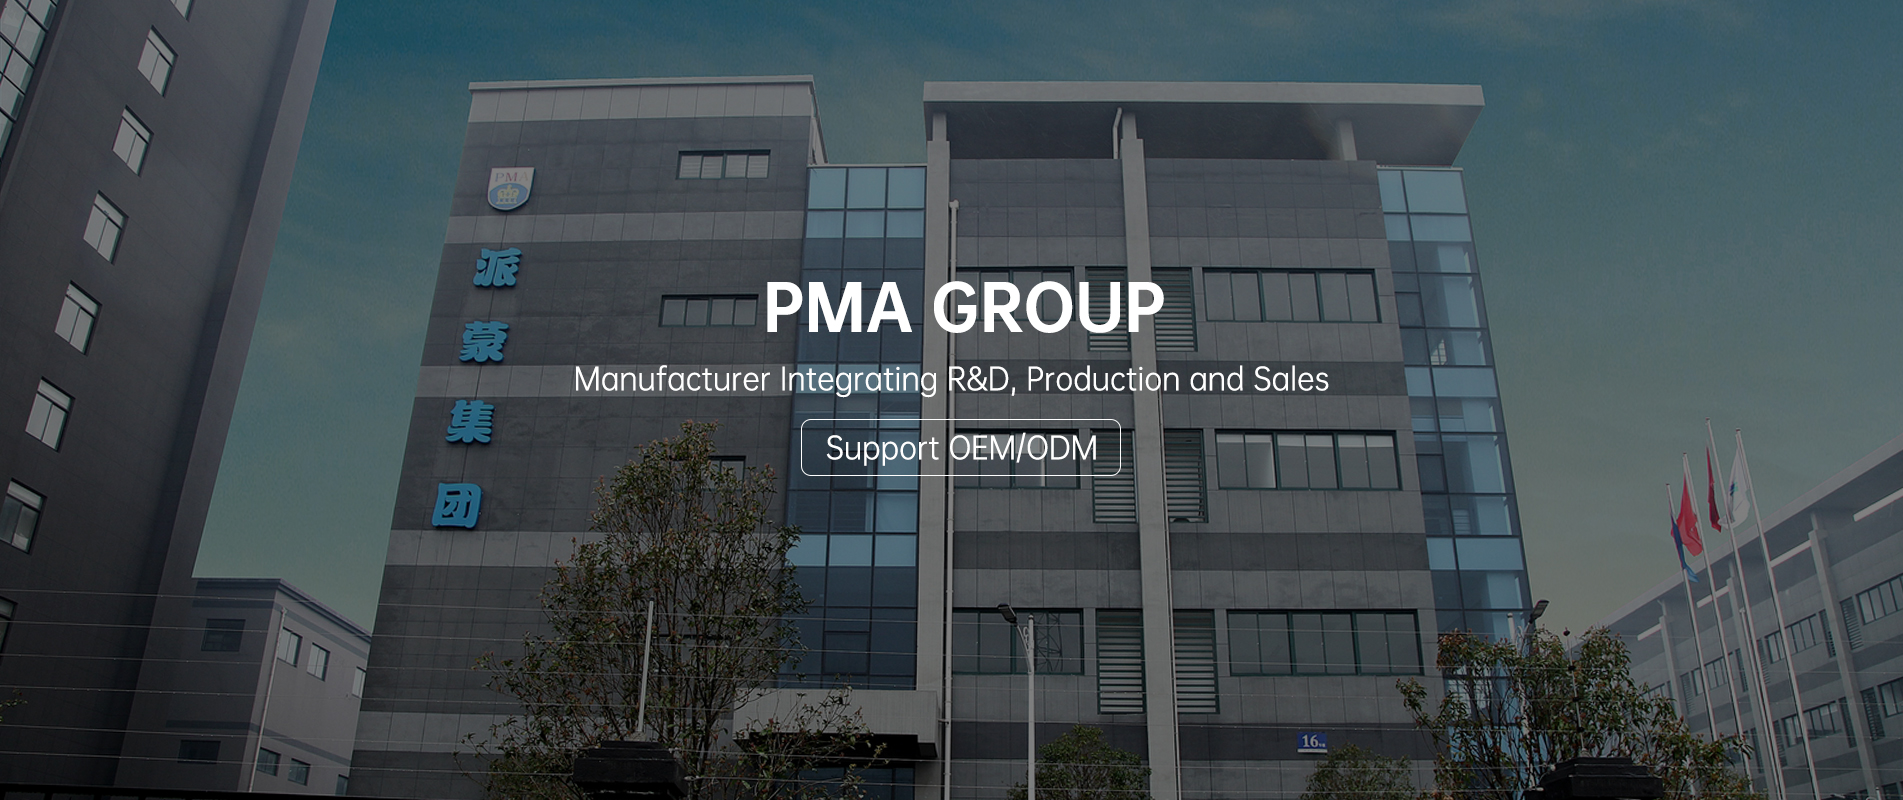 PMA Group Building